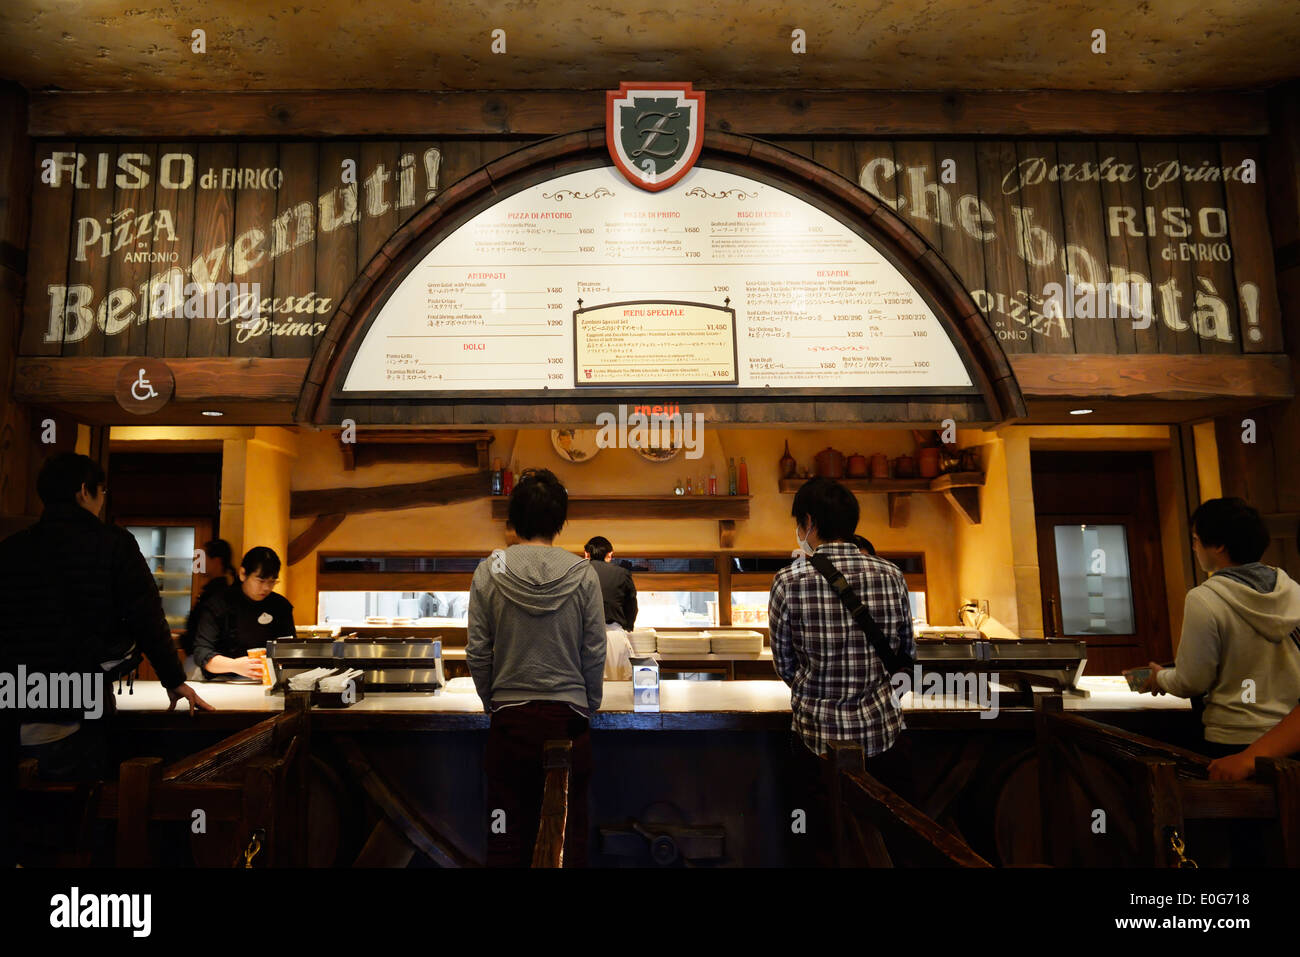 People ordering food at Zambini Brothers Ristorante, Italian restaurant at Tokyo Disneysea, Japan. Stock Photo